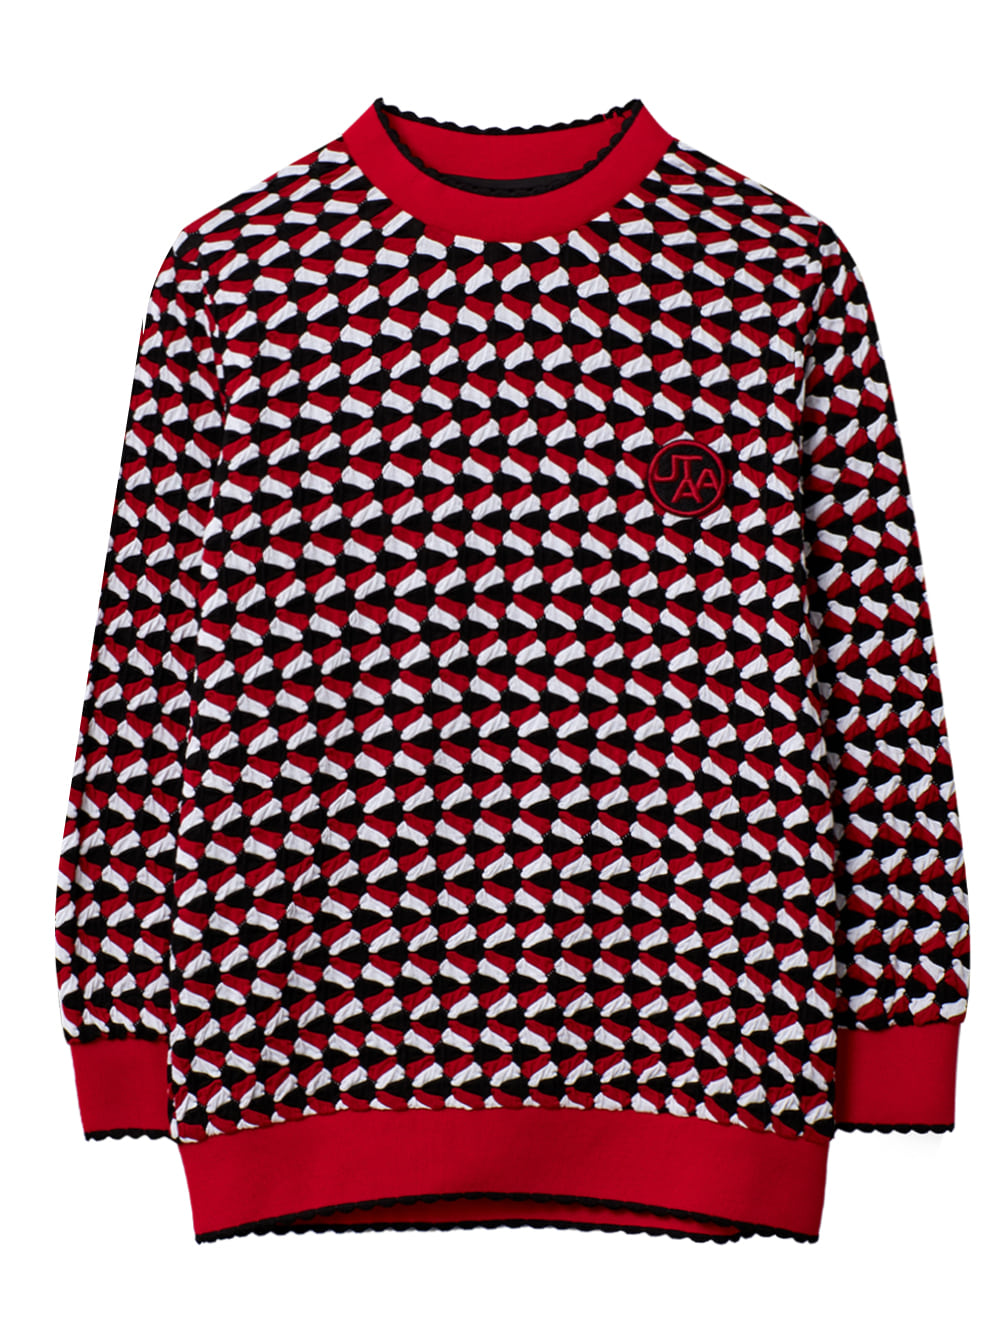 UTAA Spread Crinkle Sleeve : Red (UB3STF721RD)